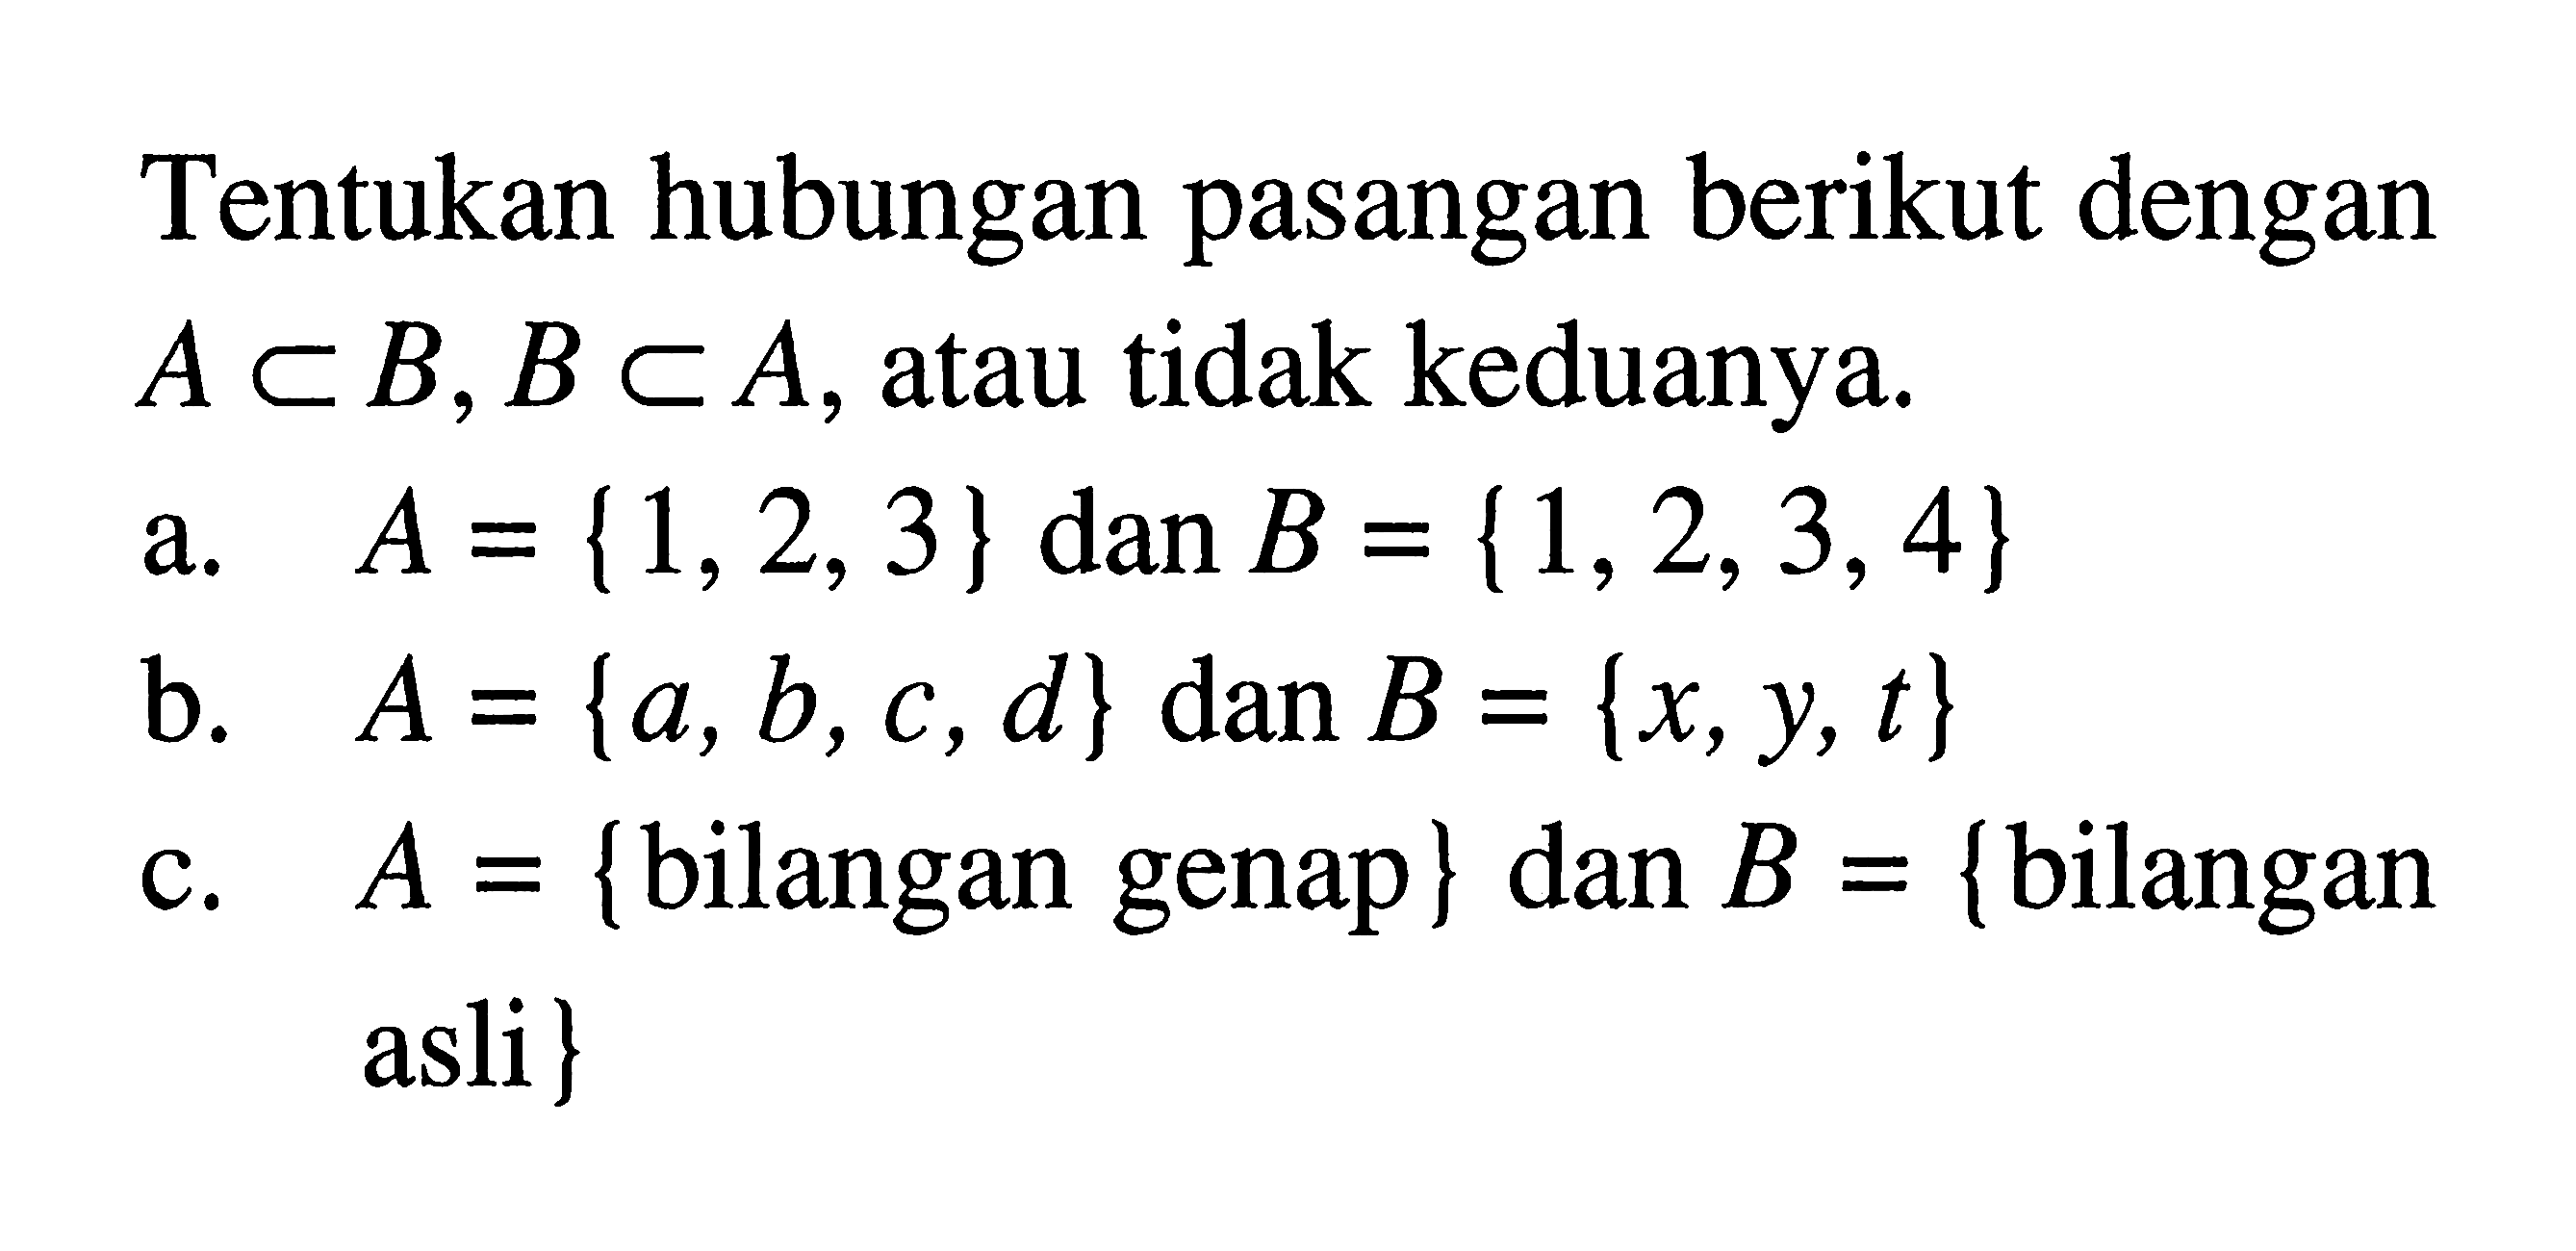 Tentukan hubungan pasangan berikut dengan A c B, B c A, atau tidak keduanya. a. A = {1, 2, 3} dan B = {1, 2, 3, 4} b. A = {a, b, c, d} dan B = {x, y, t} c. A = {bilangan genap} dan B = {bilangan asli }